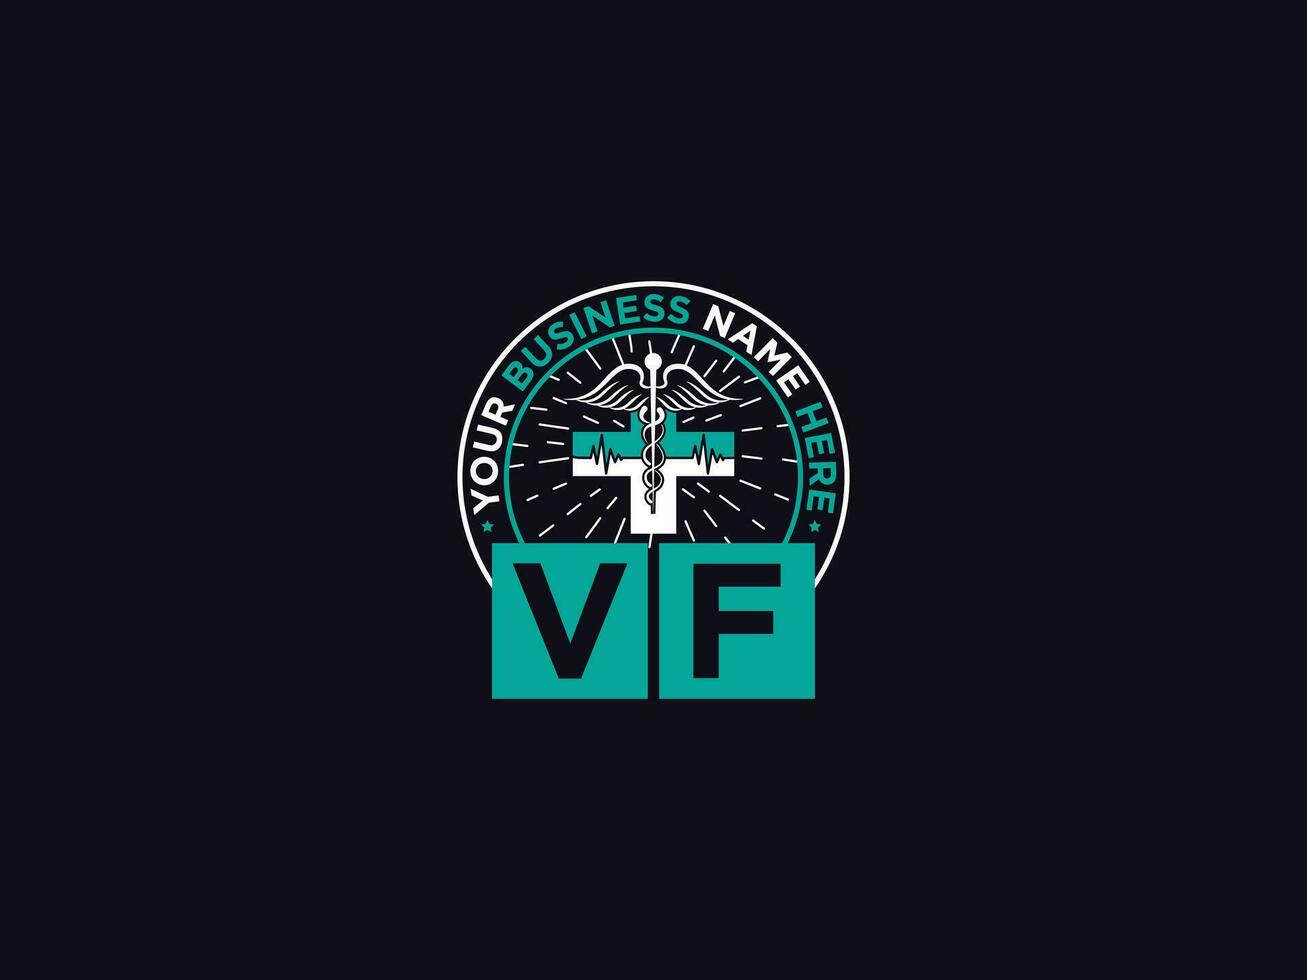 klinisch vf logo icoon, medisch vf fv logo brief ontwerp voor artsen vector